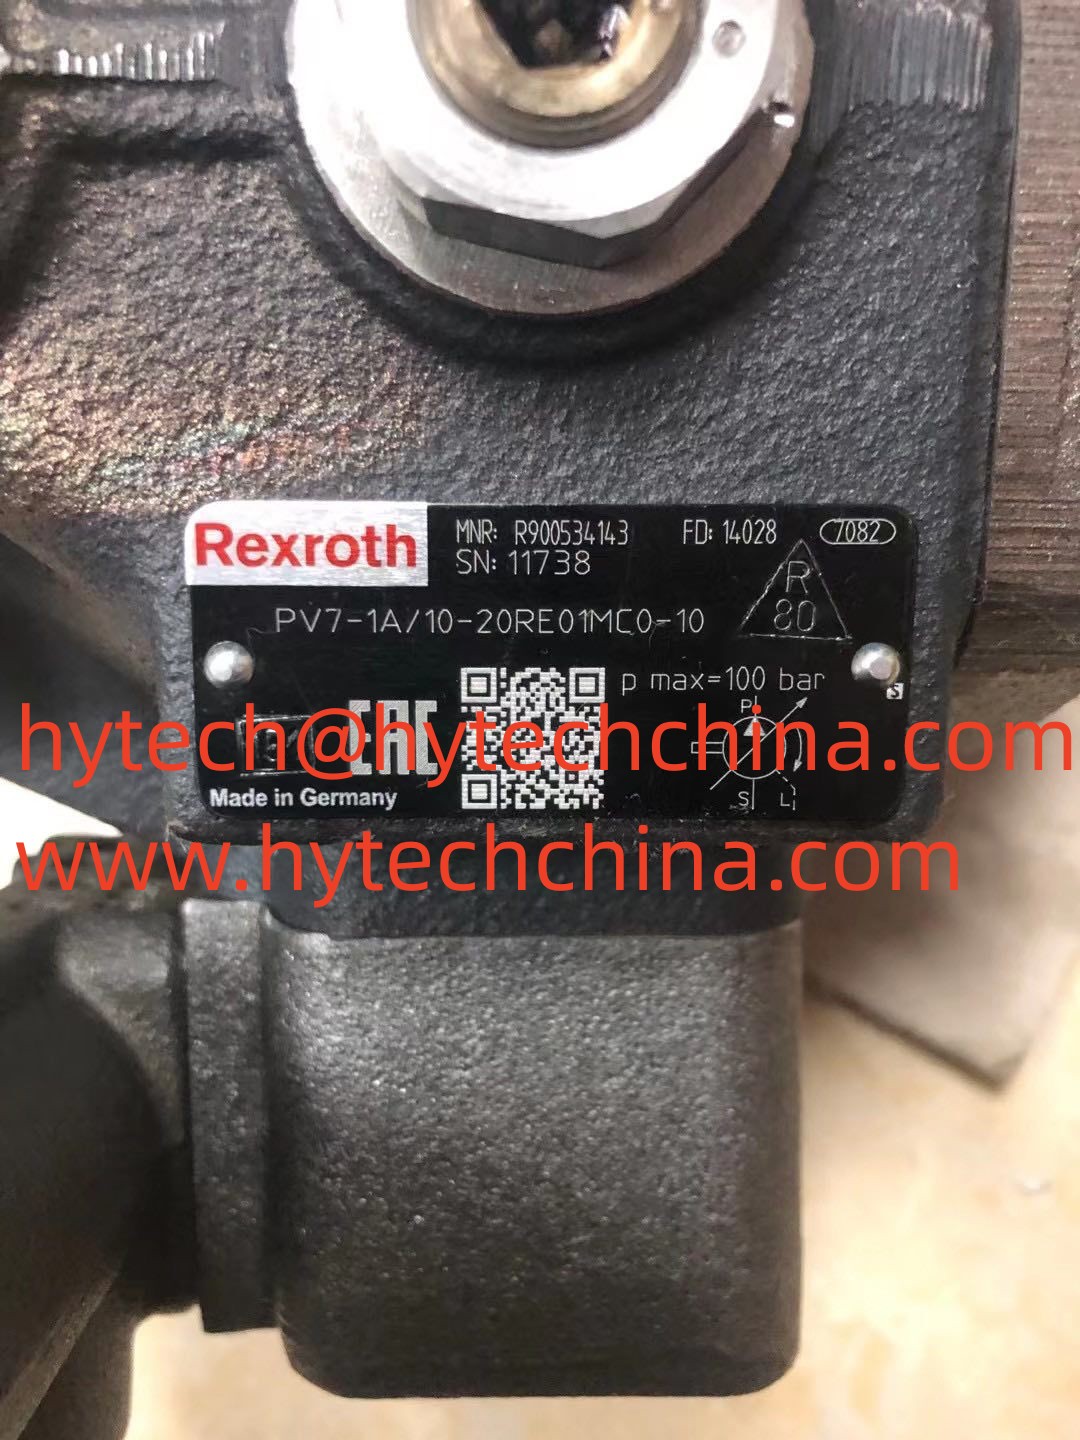 We have original Rexroth vane pumps PV7-1A/10-20RE01MC0-10 in stock.